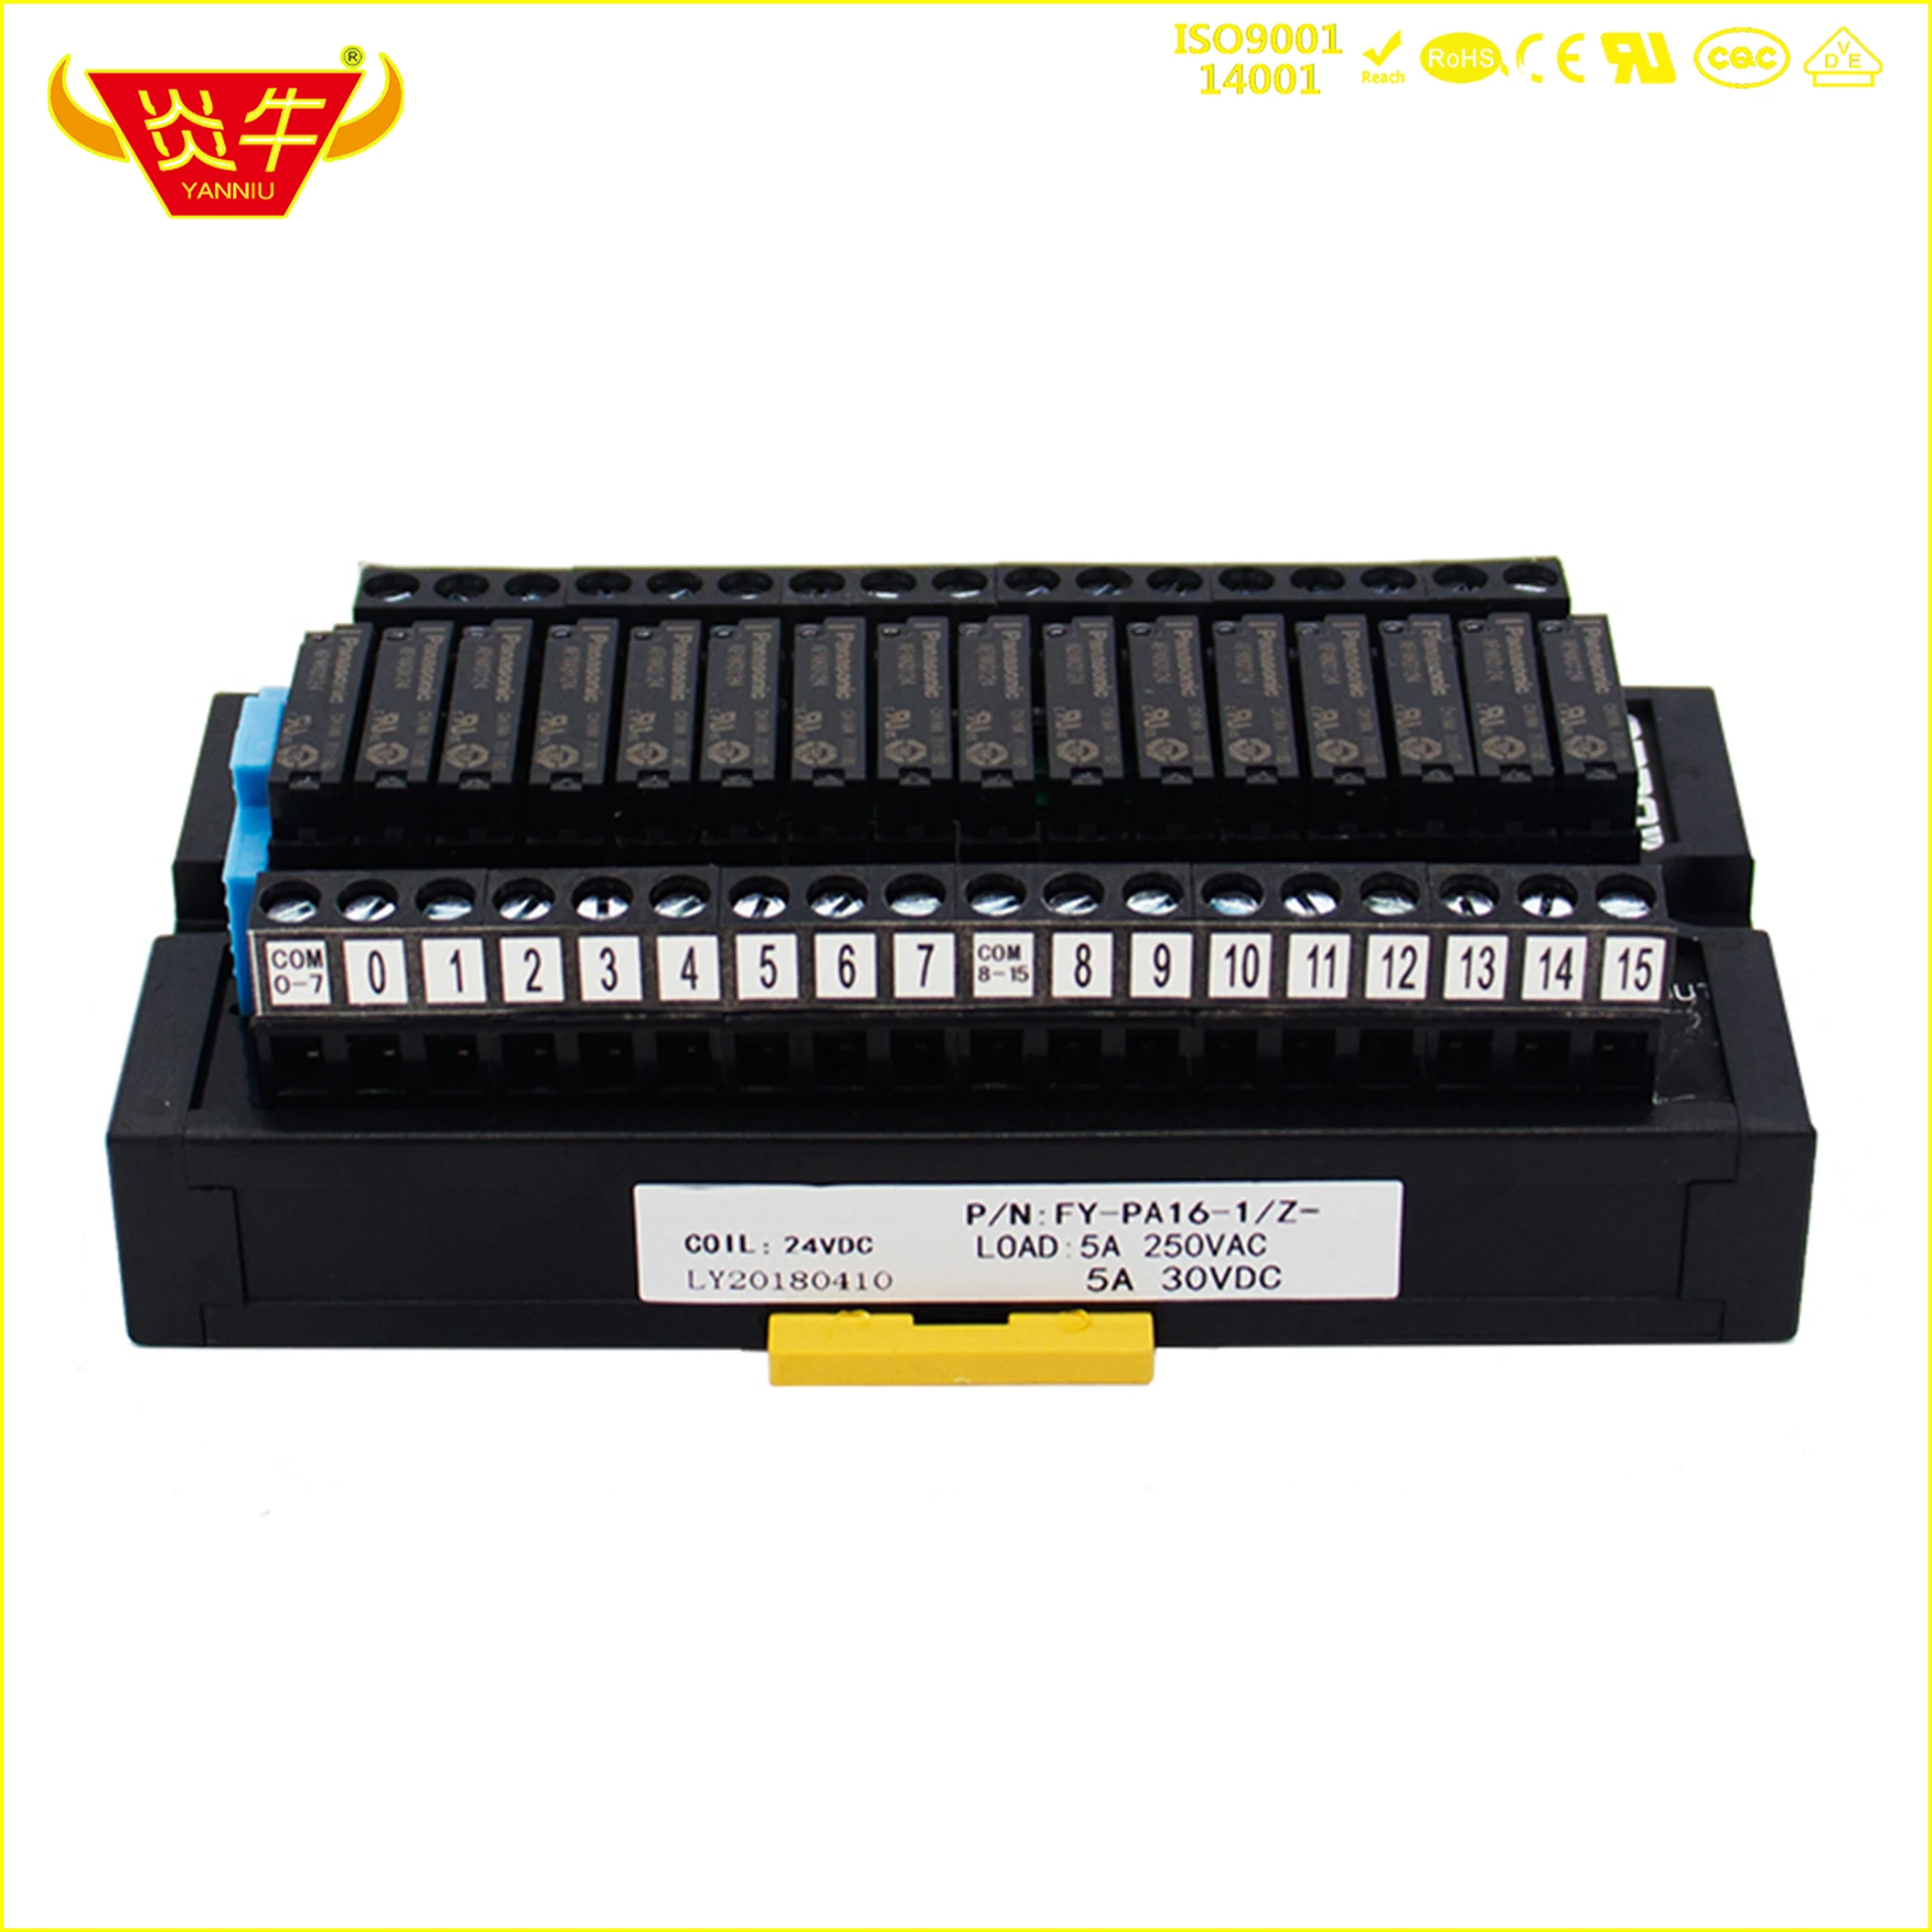 Panasonic APAN3105 APAN3112 APAN3124  Slim relay  16 channel DIN Mounted relay module  Industrial control  for PLC  YANNIU